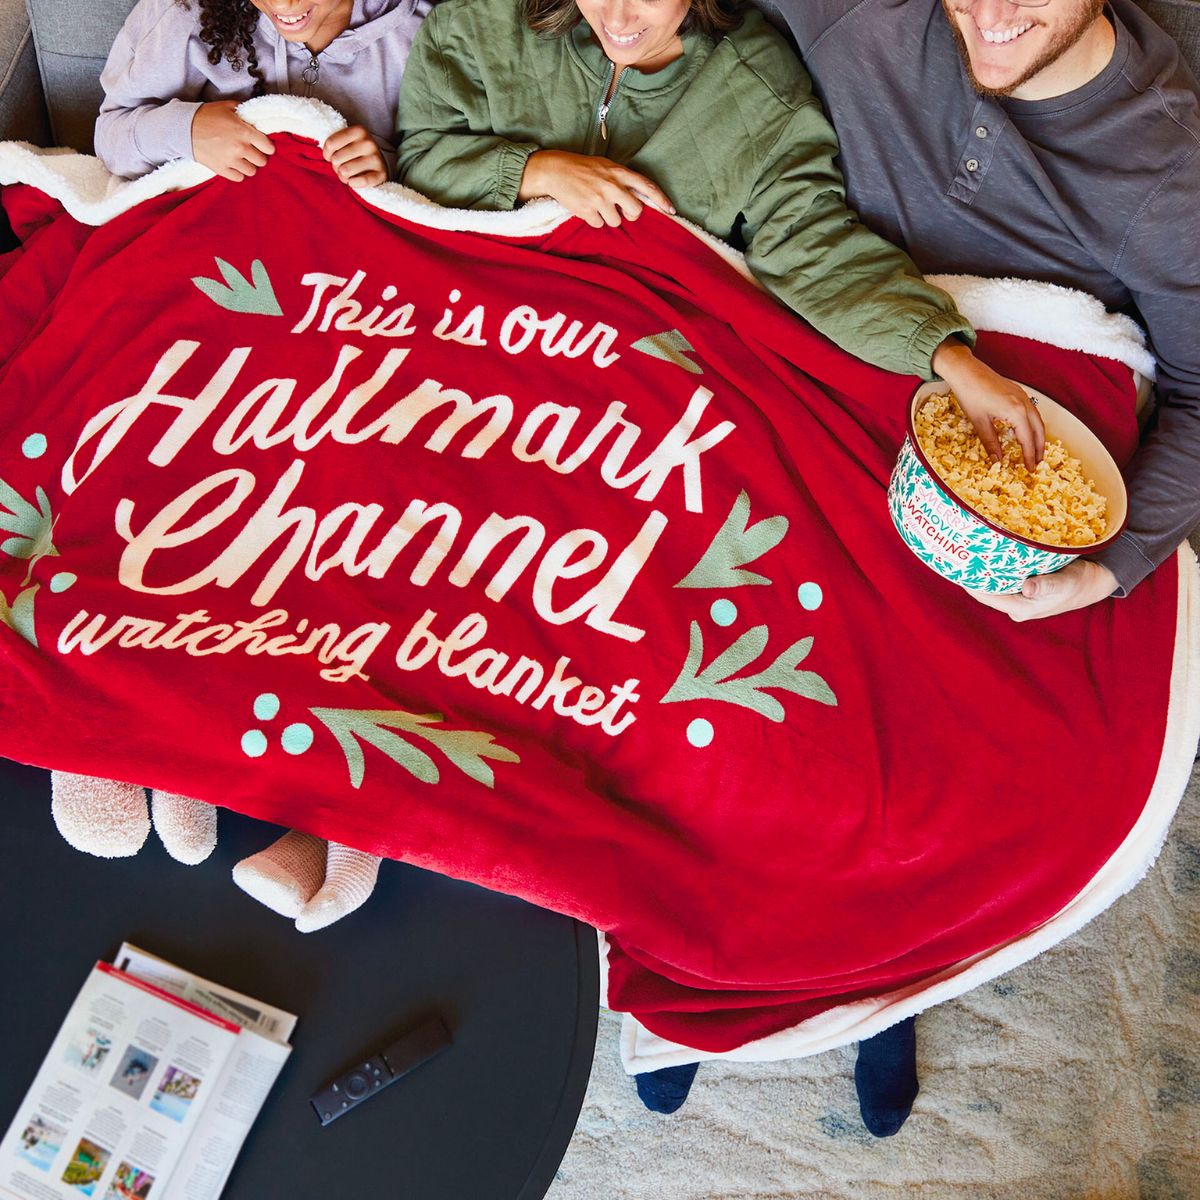 3 people snuggled under a hallmark channel oversized holiday blanket eating popcorn